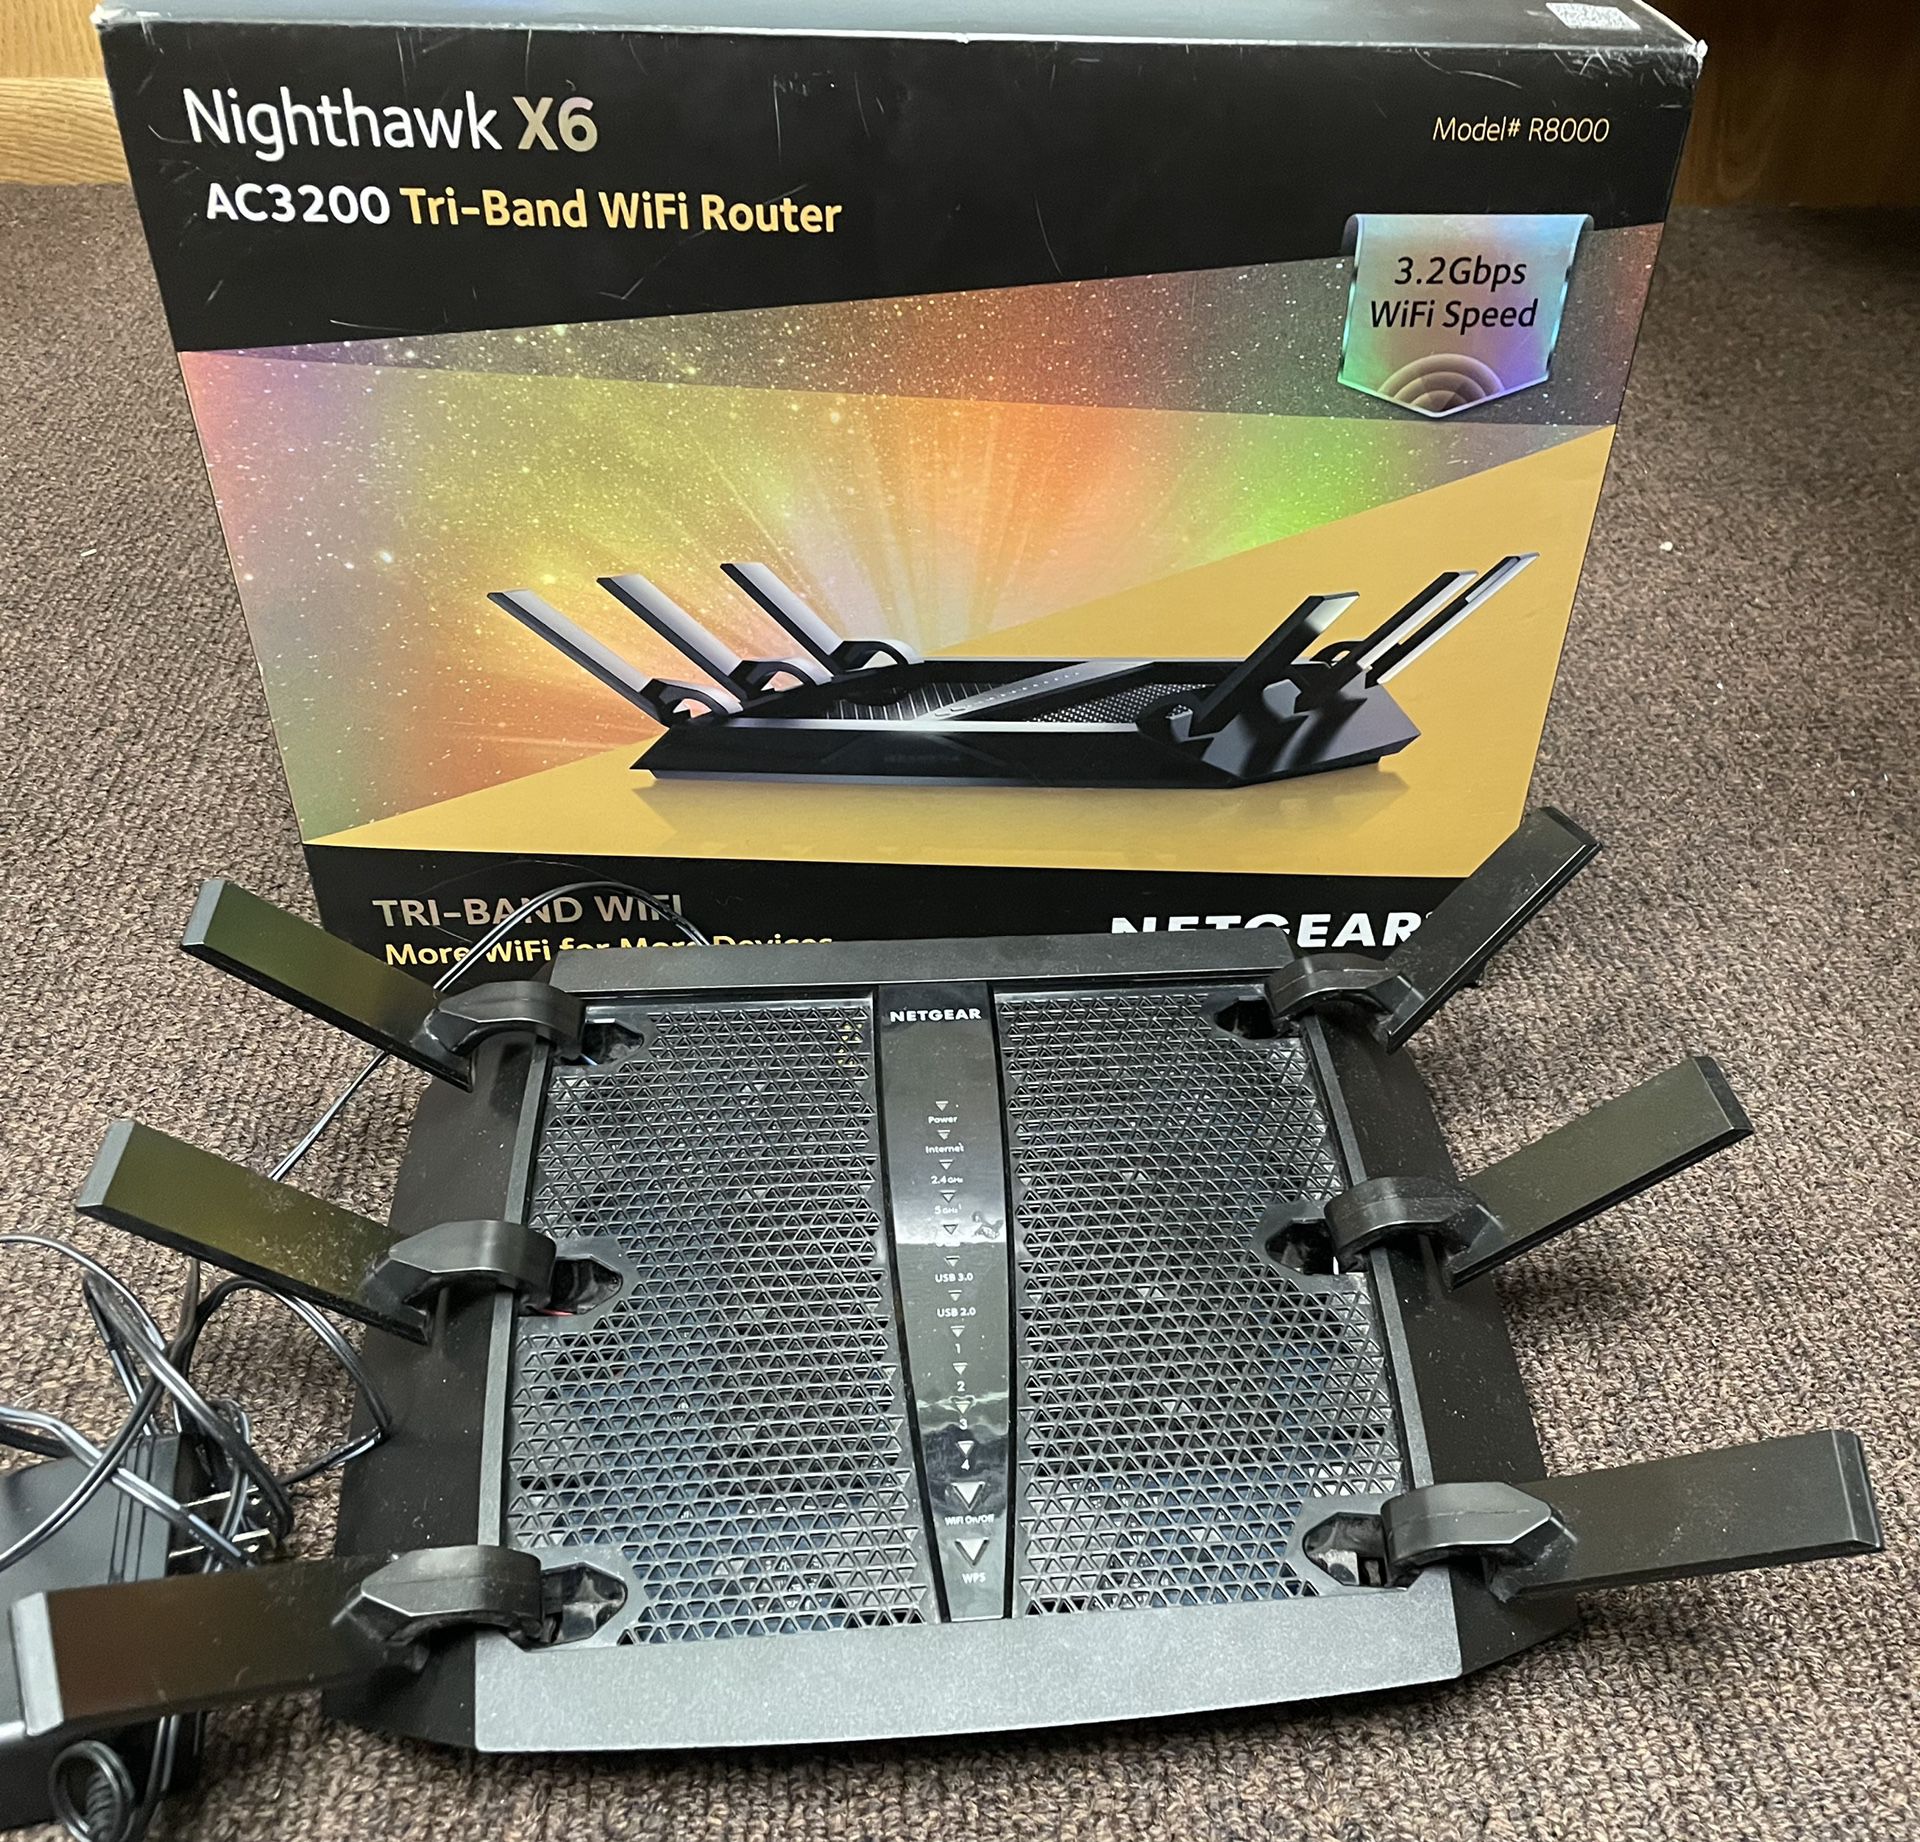 NETGEAR AC3200 Nighthawk X6 R8000 Tri-band WiFi Router In Box Great Condition